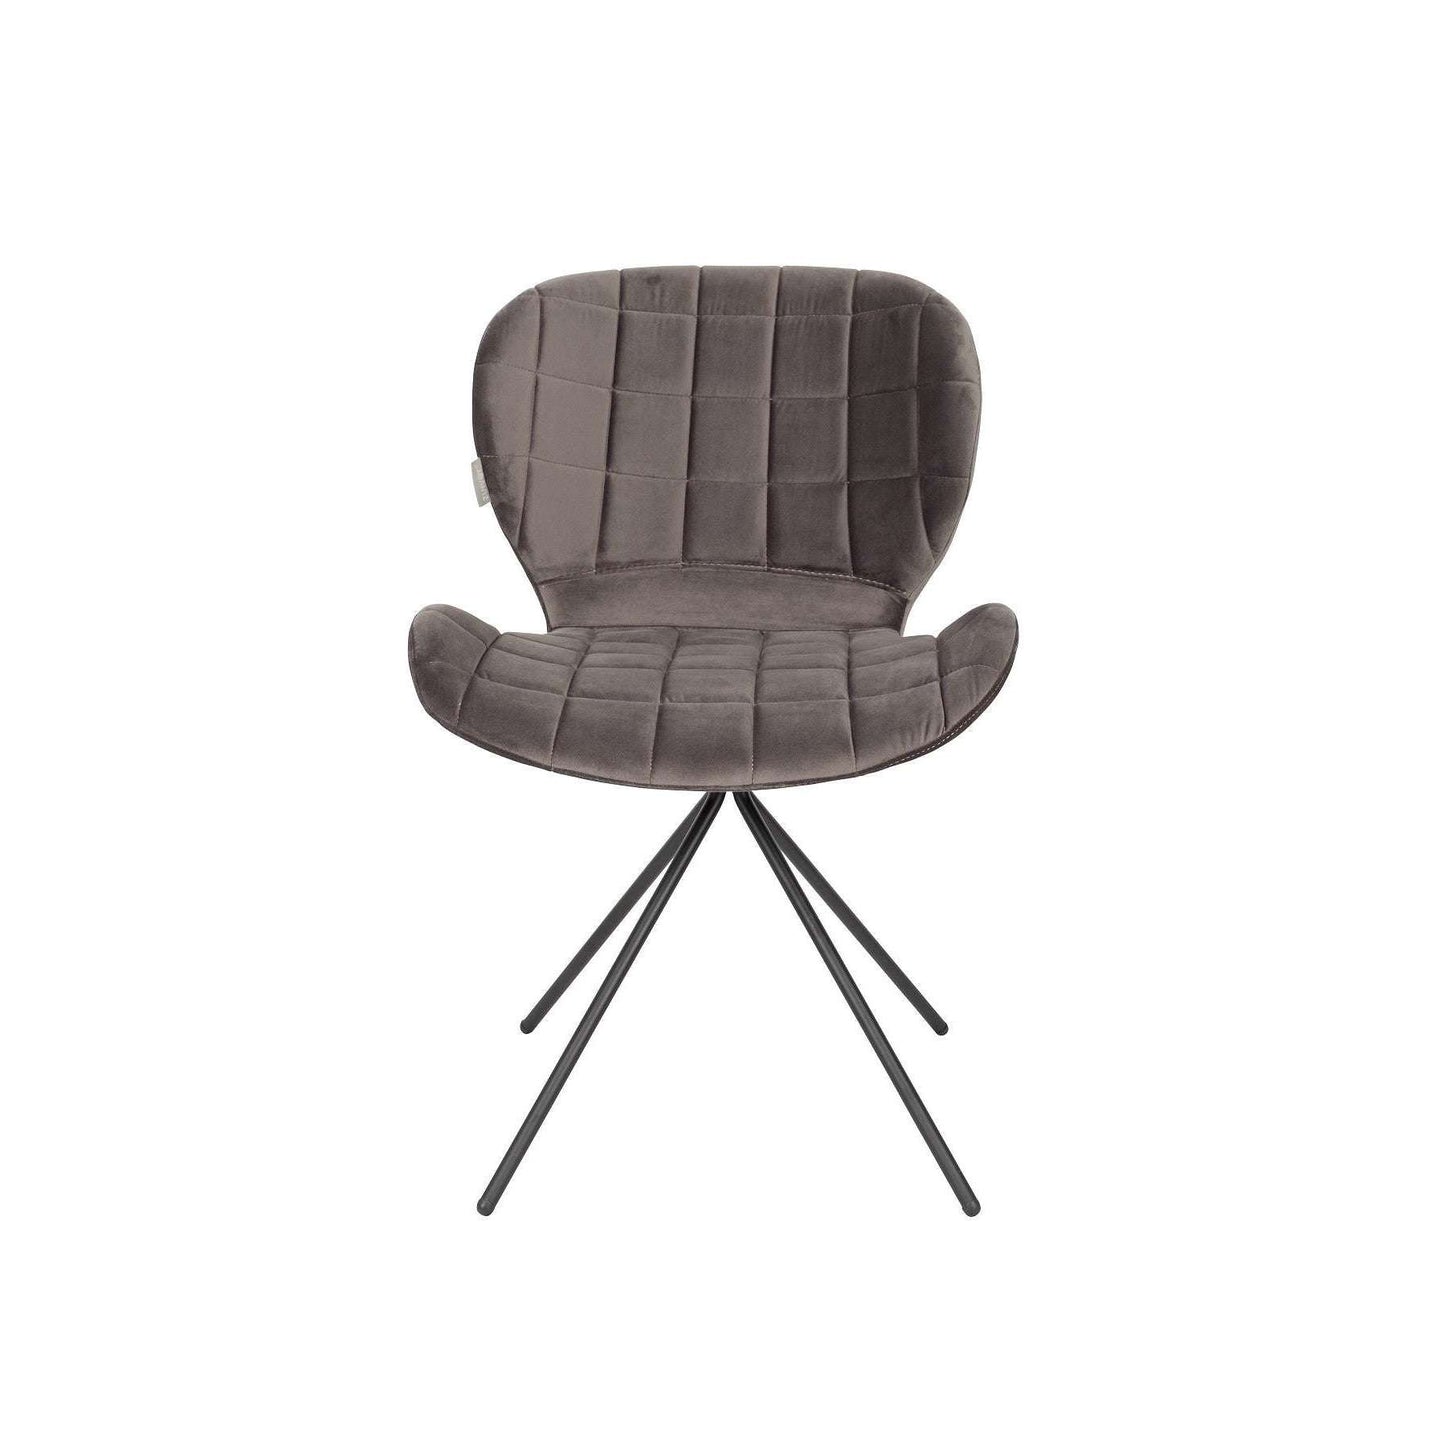 Zuiver stoel omg velvet grijs 56 x 51 x 80 cm